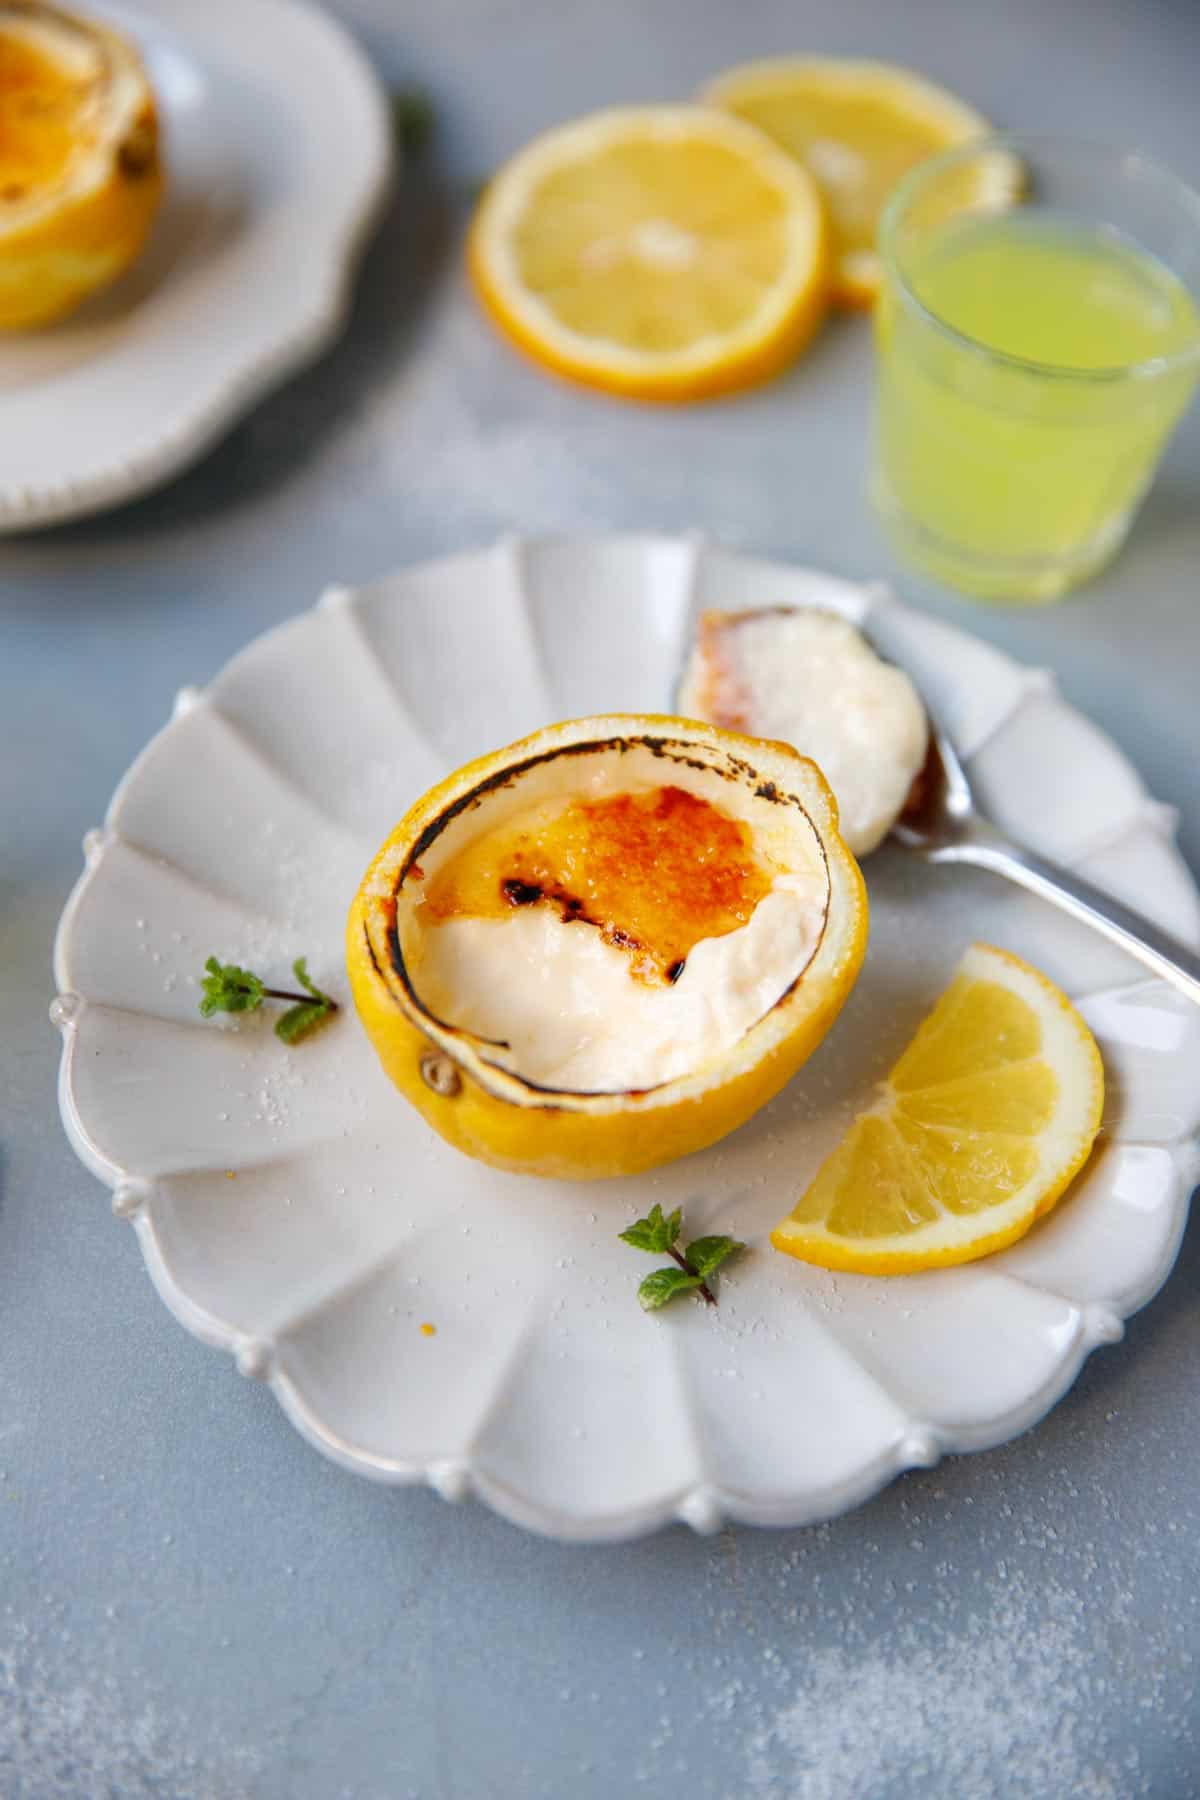 Homemade Peanut Butter Recipe - Love and Lemons